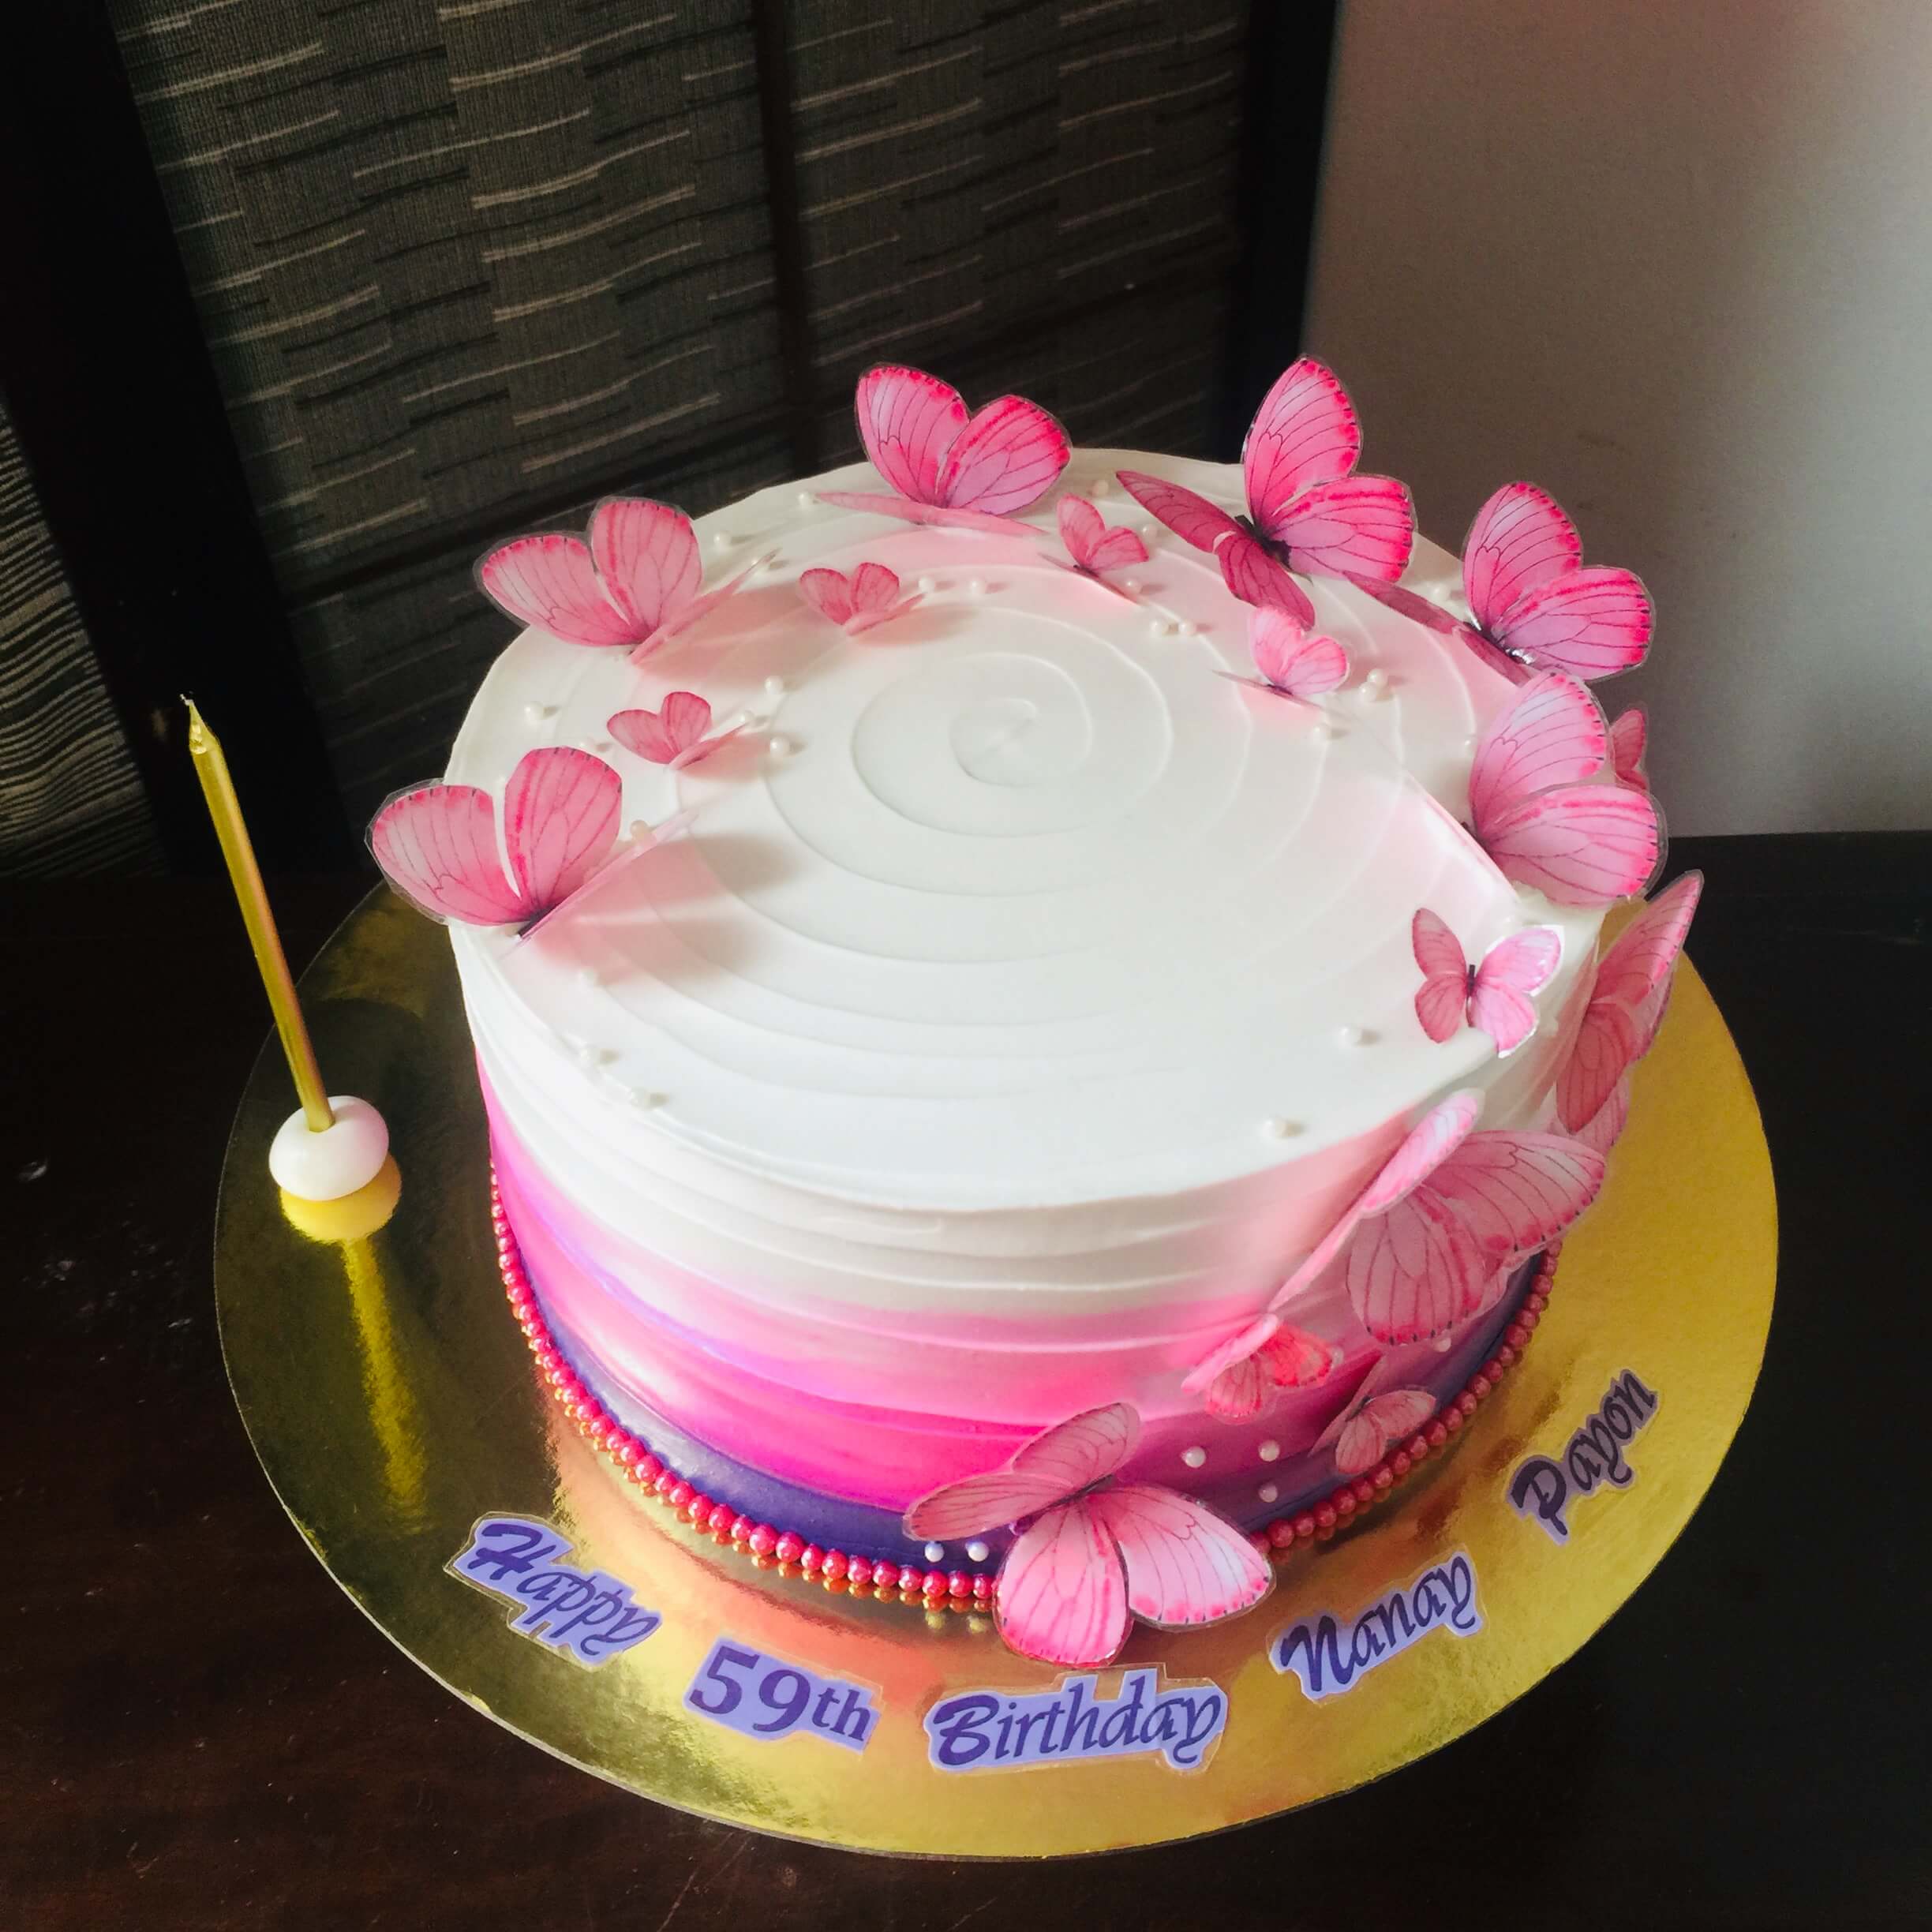 Grand Celebrations: Fantastic Birthday Cake Ideas for Grandparents -  CakeZone Blog